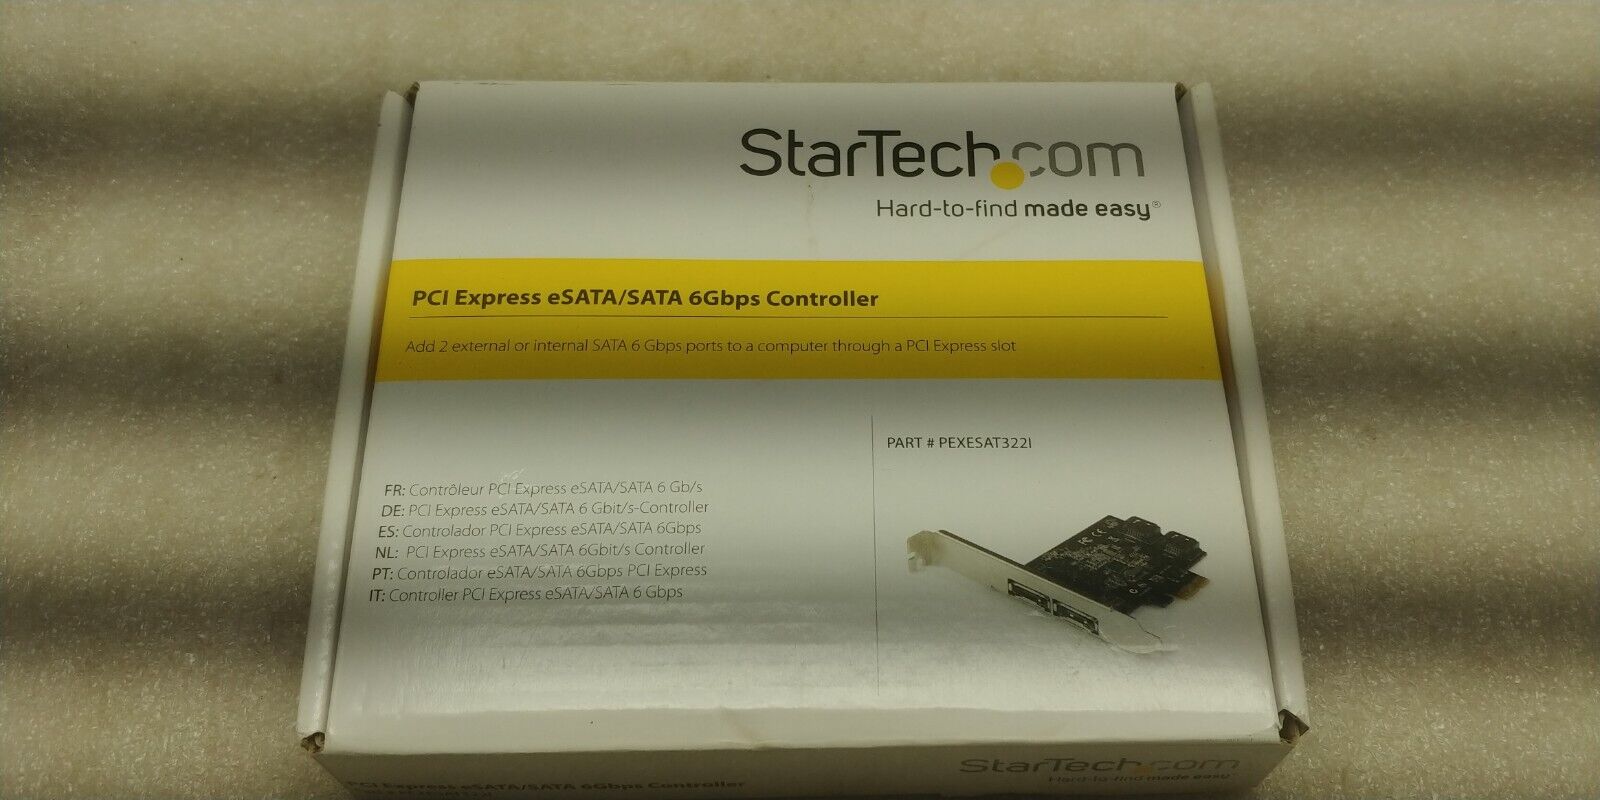 StarTech PCI Express eSata/SATA 6Gbps 2-Port Controller Card Part # PEXESAT3221